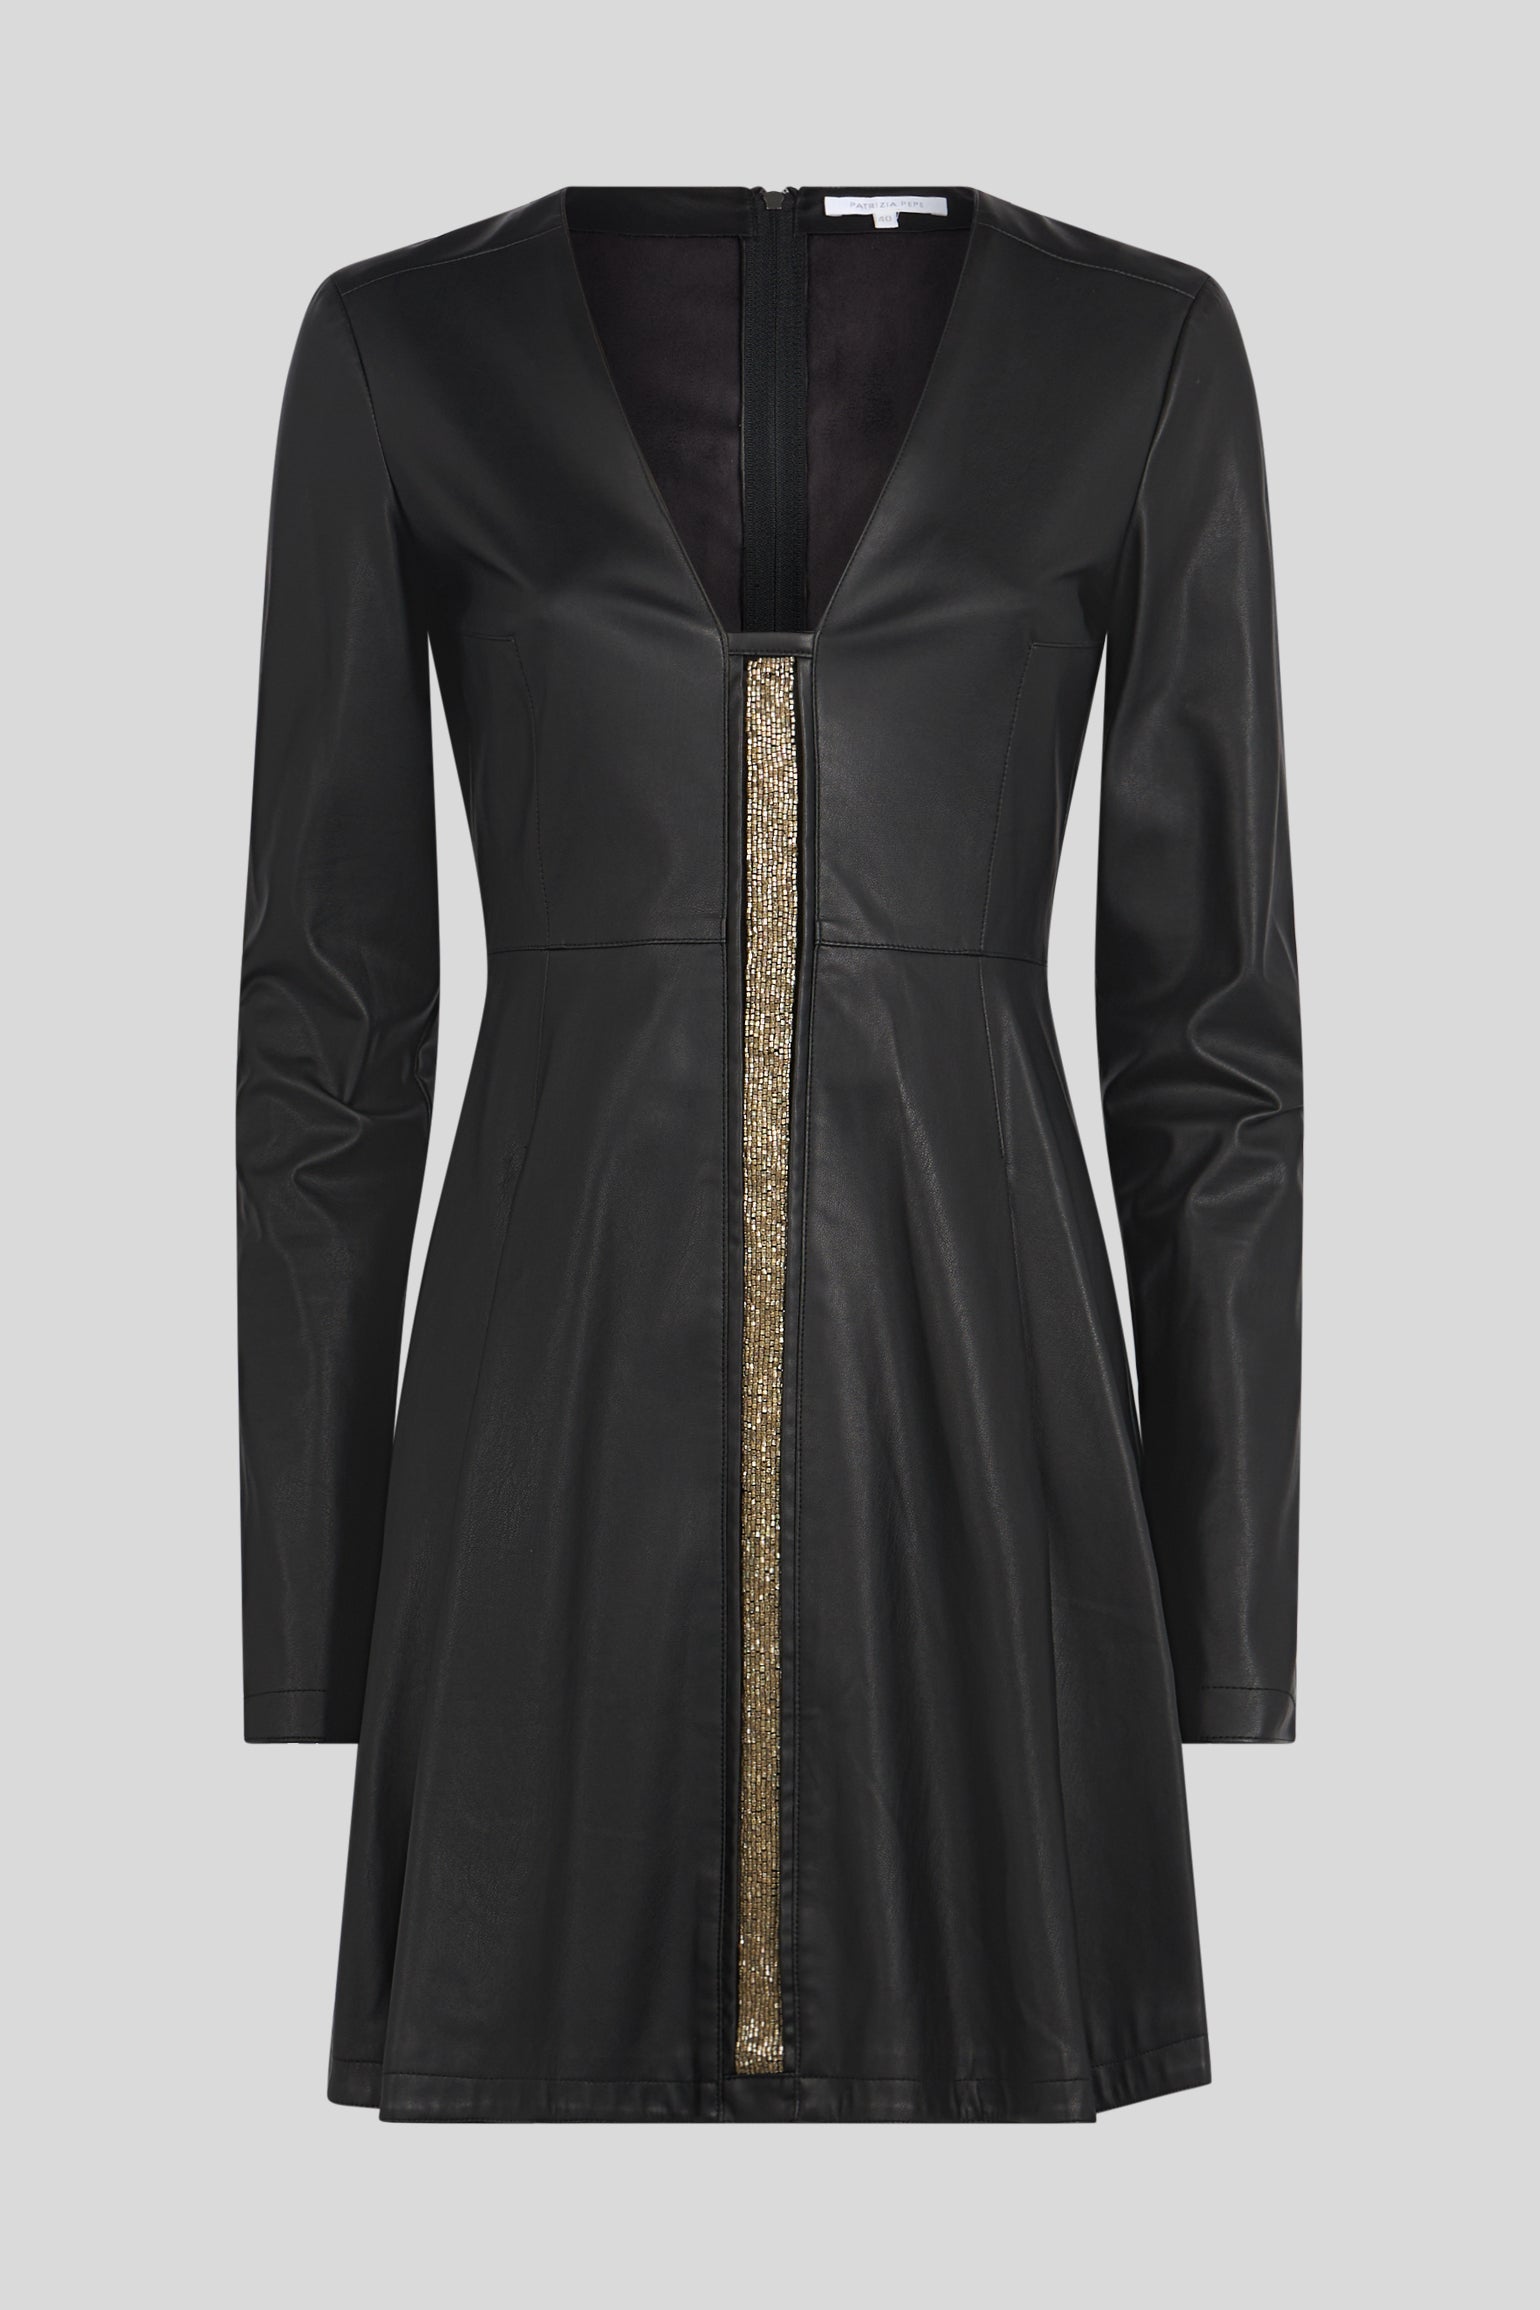 PATRIZIA PEPE Black Leatherette Dress